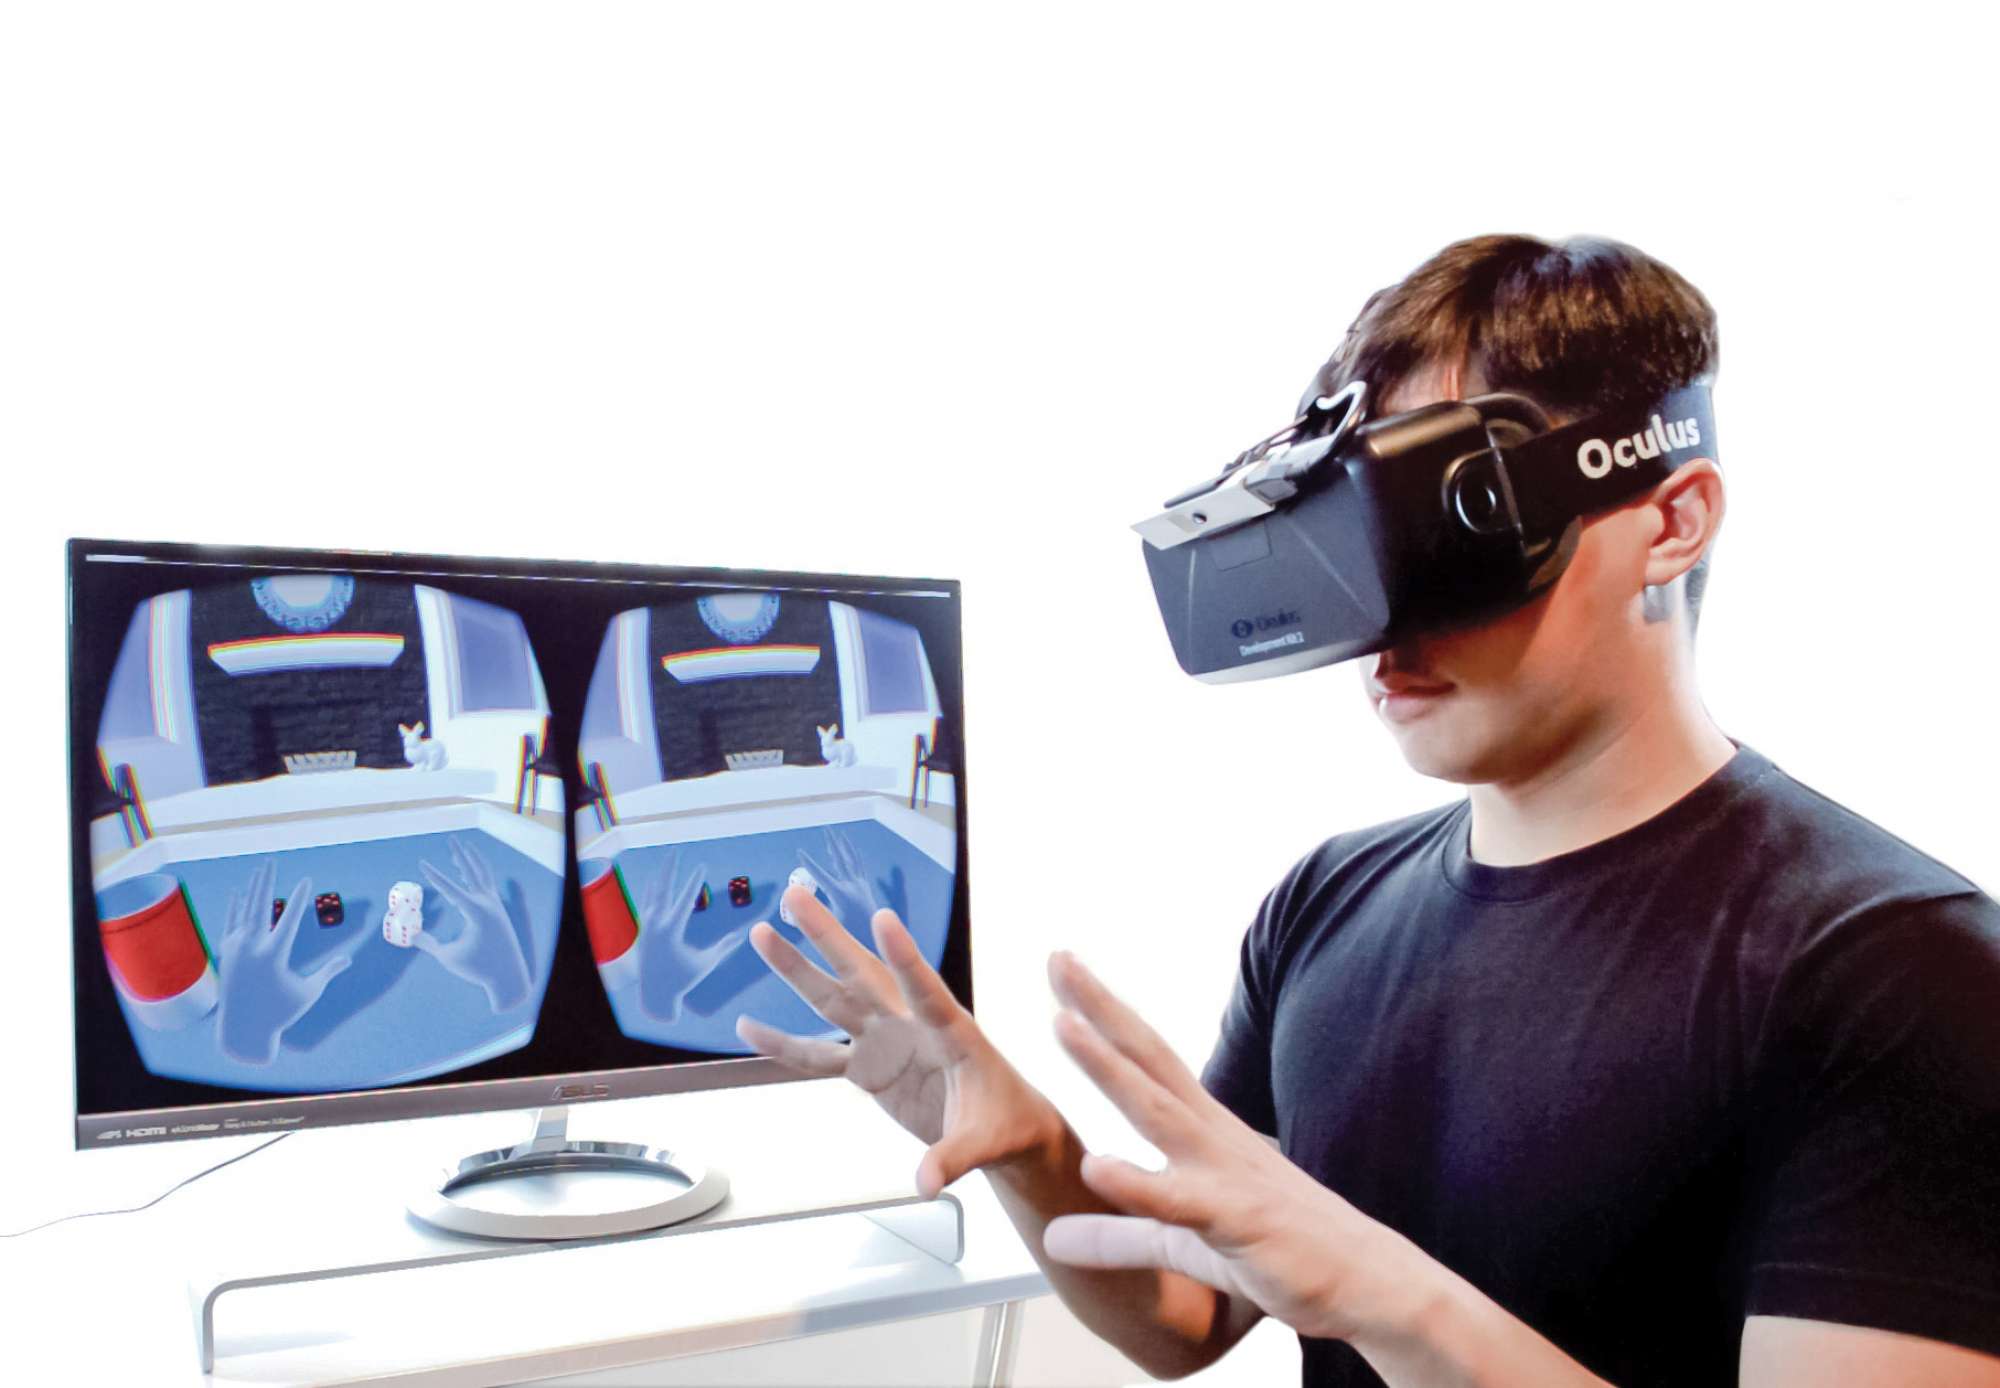 Vr long. ВР очки Oculus Rift. VR очки Oculus 3. PLAYSTATION vr2. Очки Окулус 2.